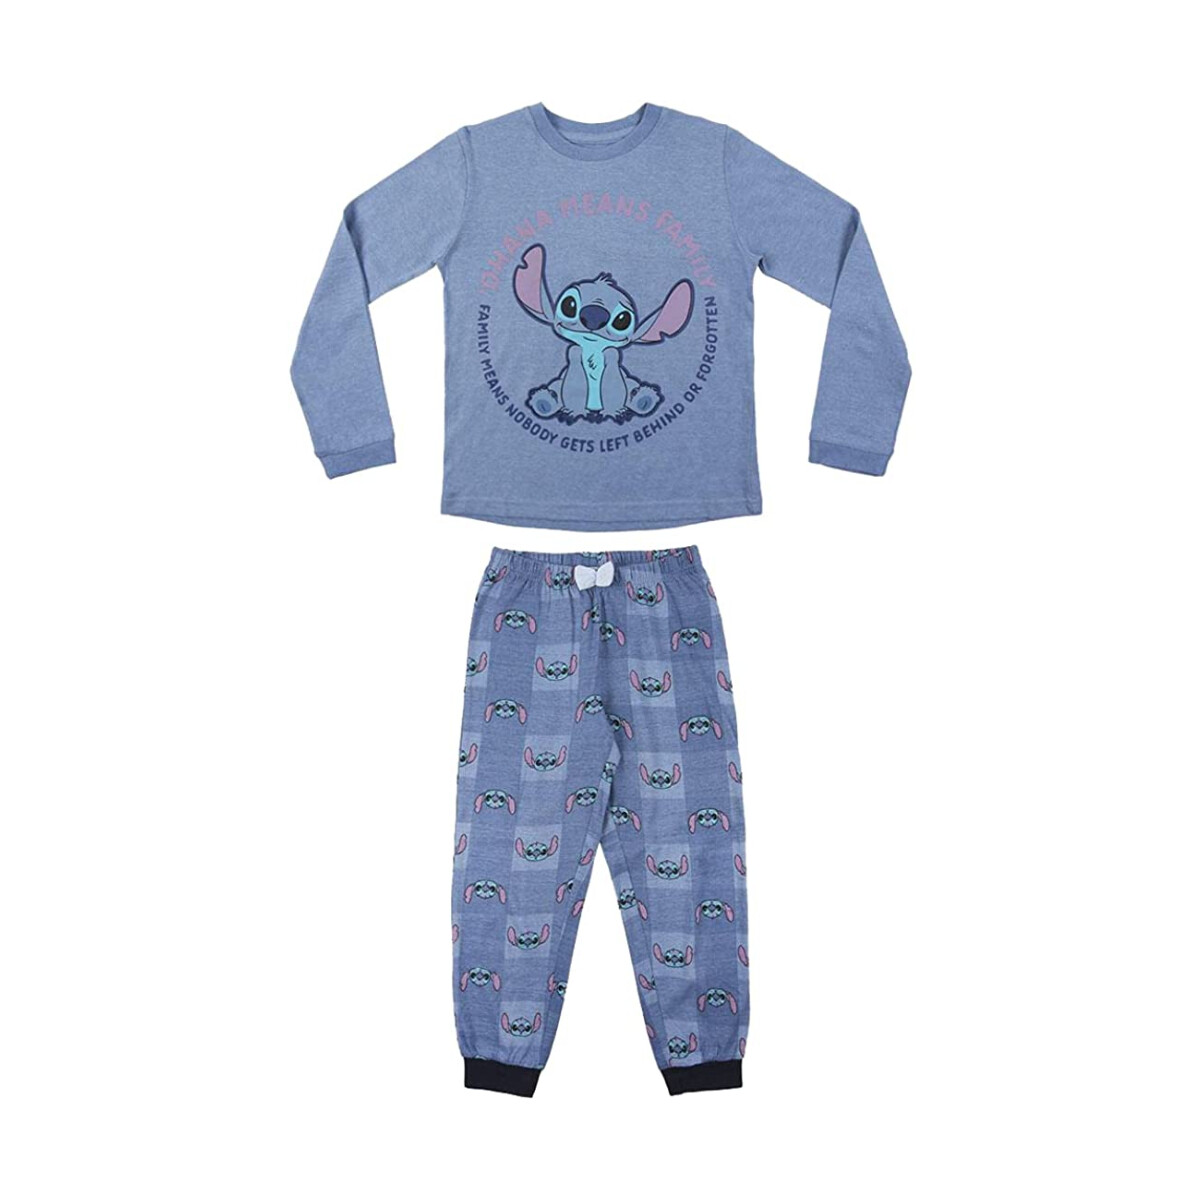 textil Hombre Pijama Stitch 2200008177 Azul